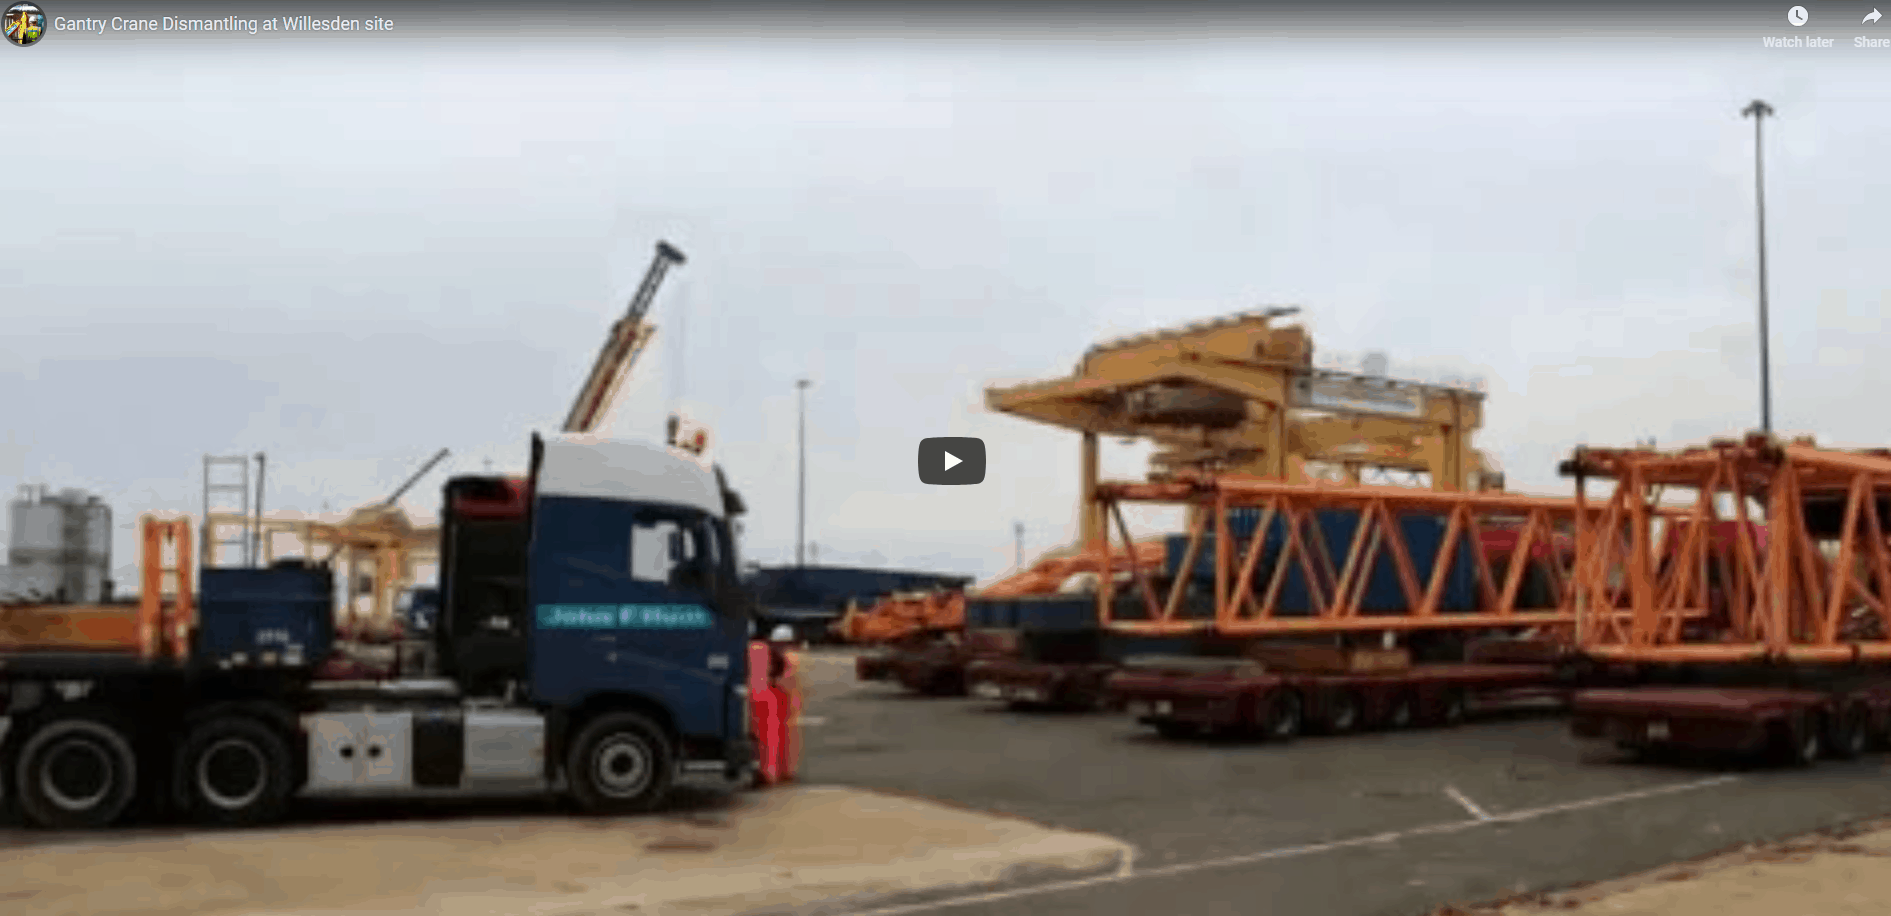 Gantry Crane Dismantling – Willesden site